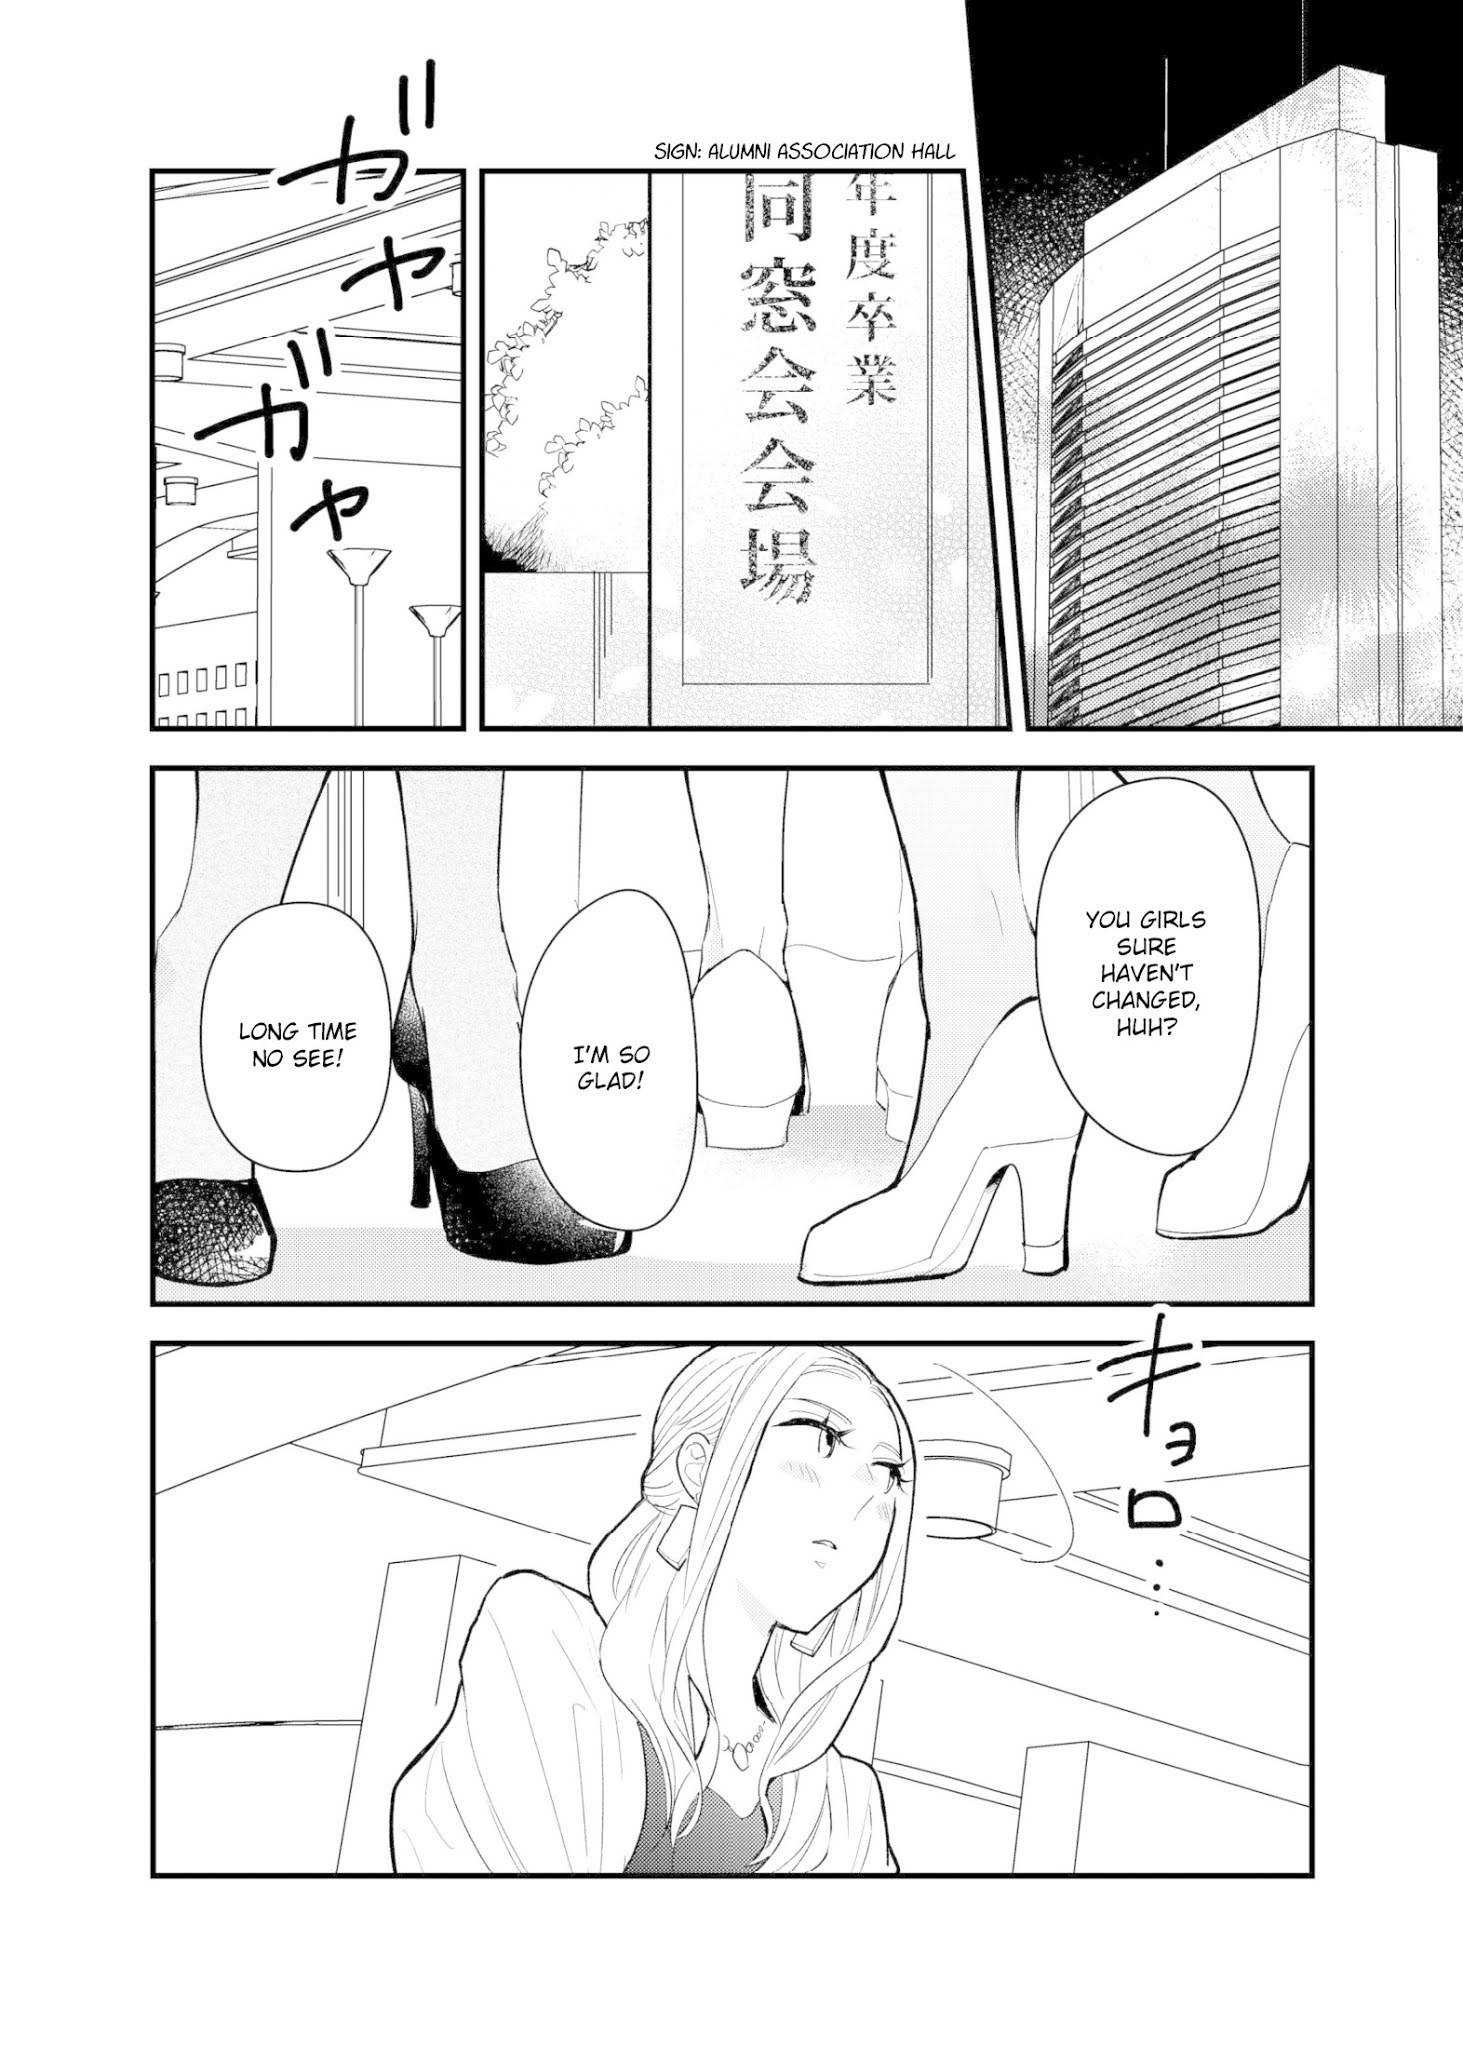 Touma-Kun - Page 2